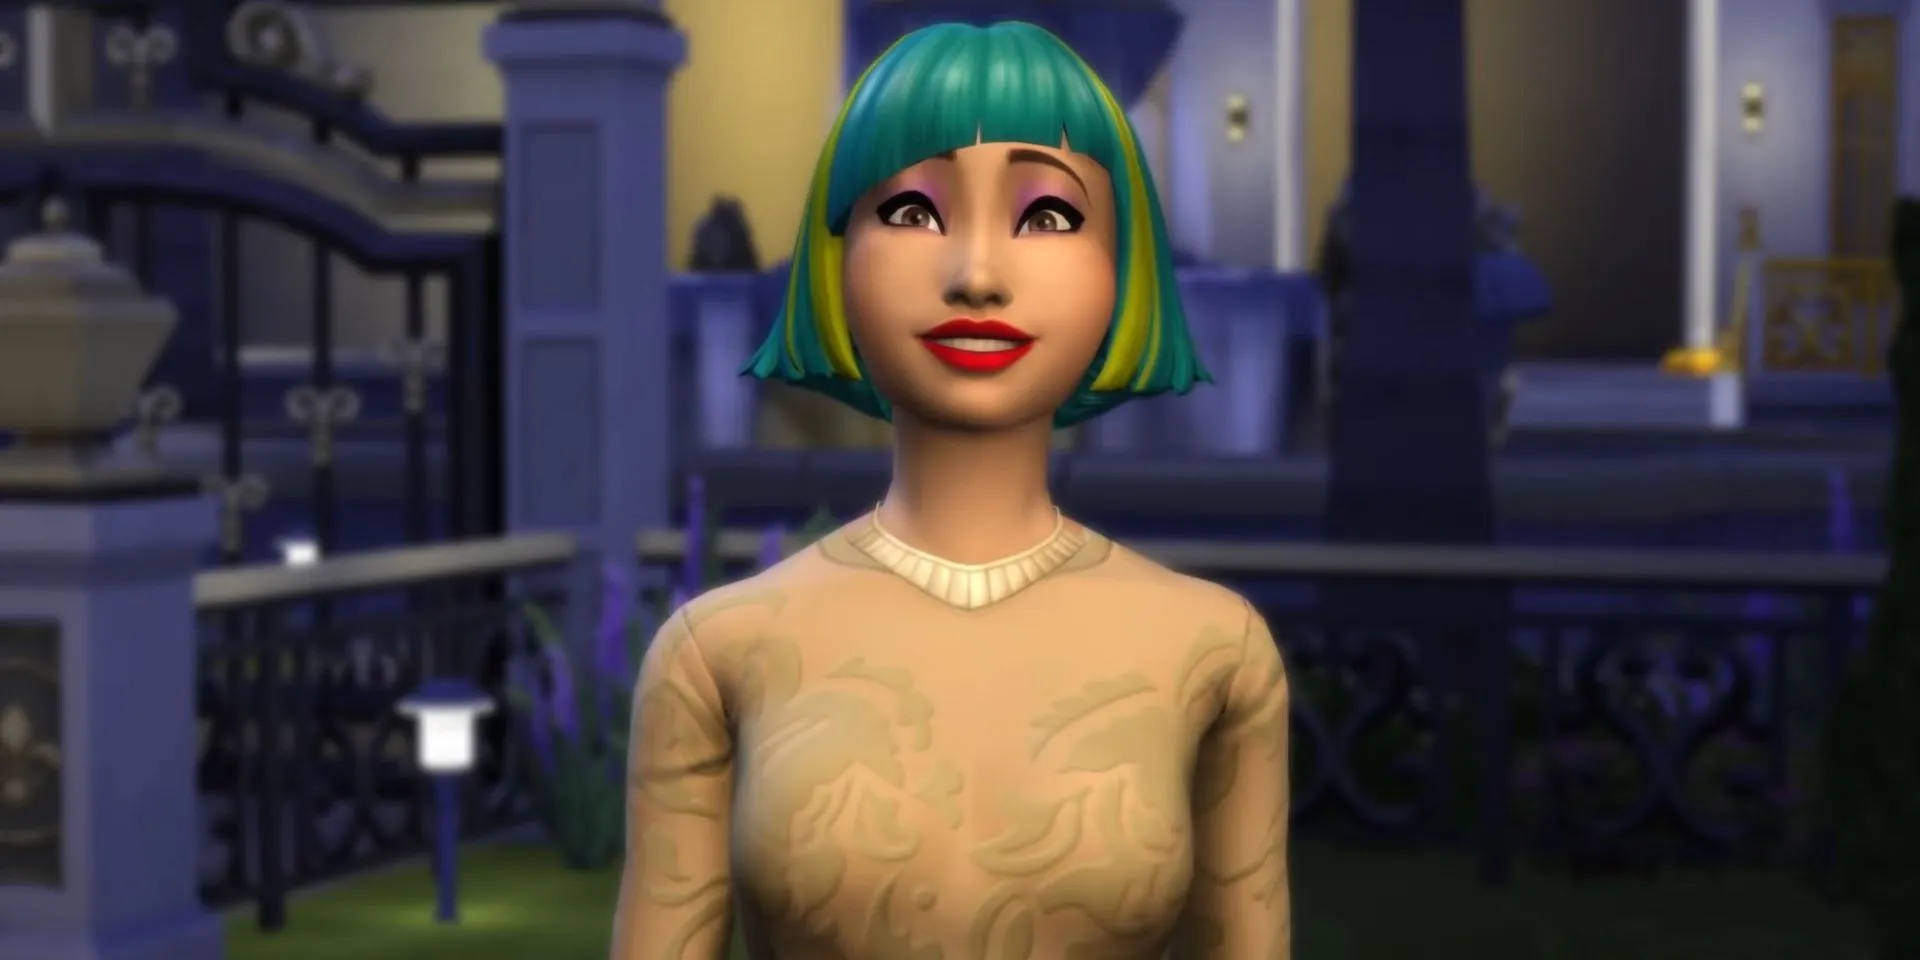 The Sims 4 fashion sim